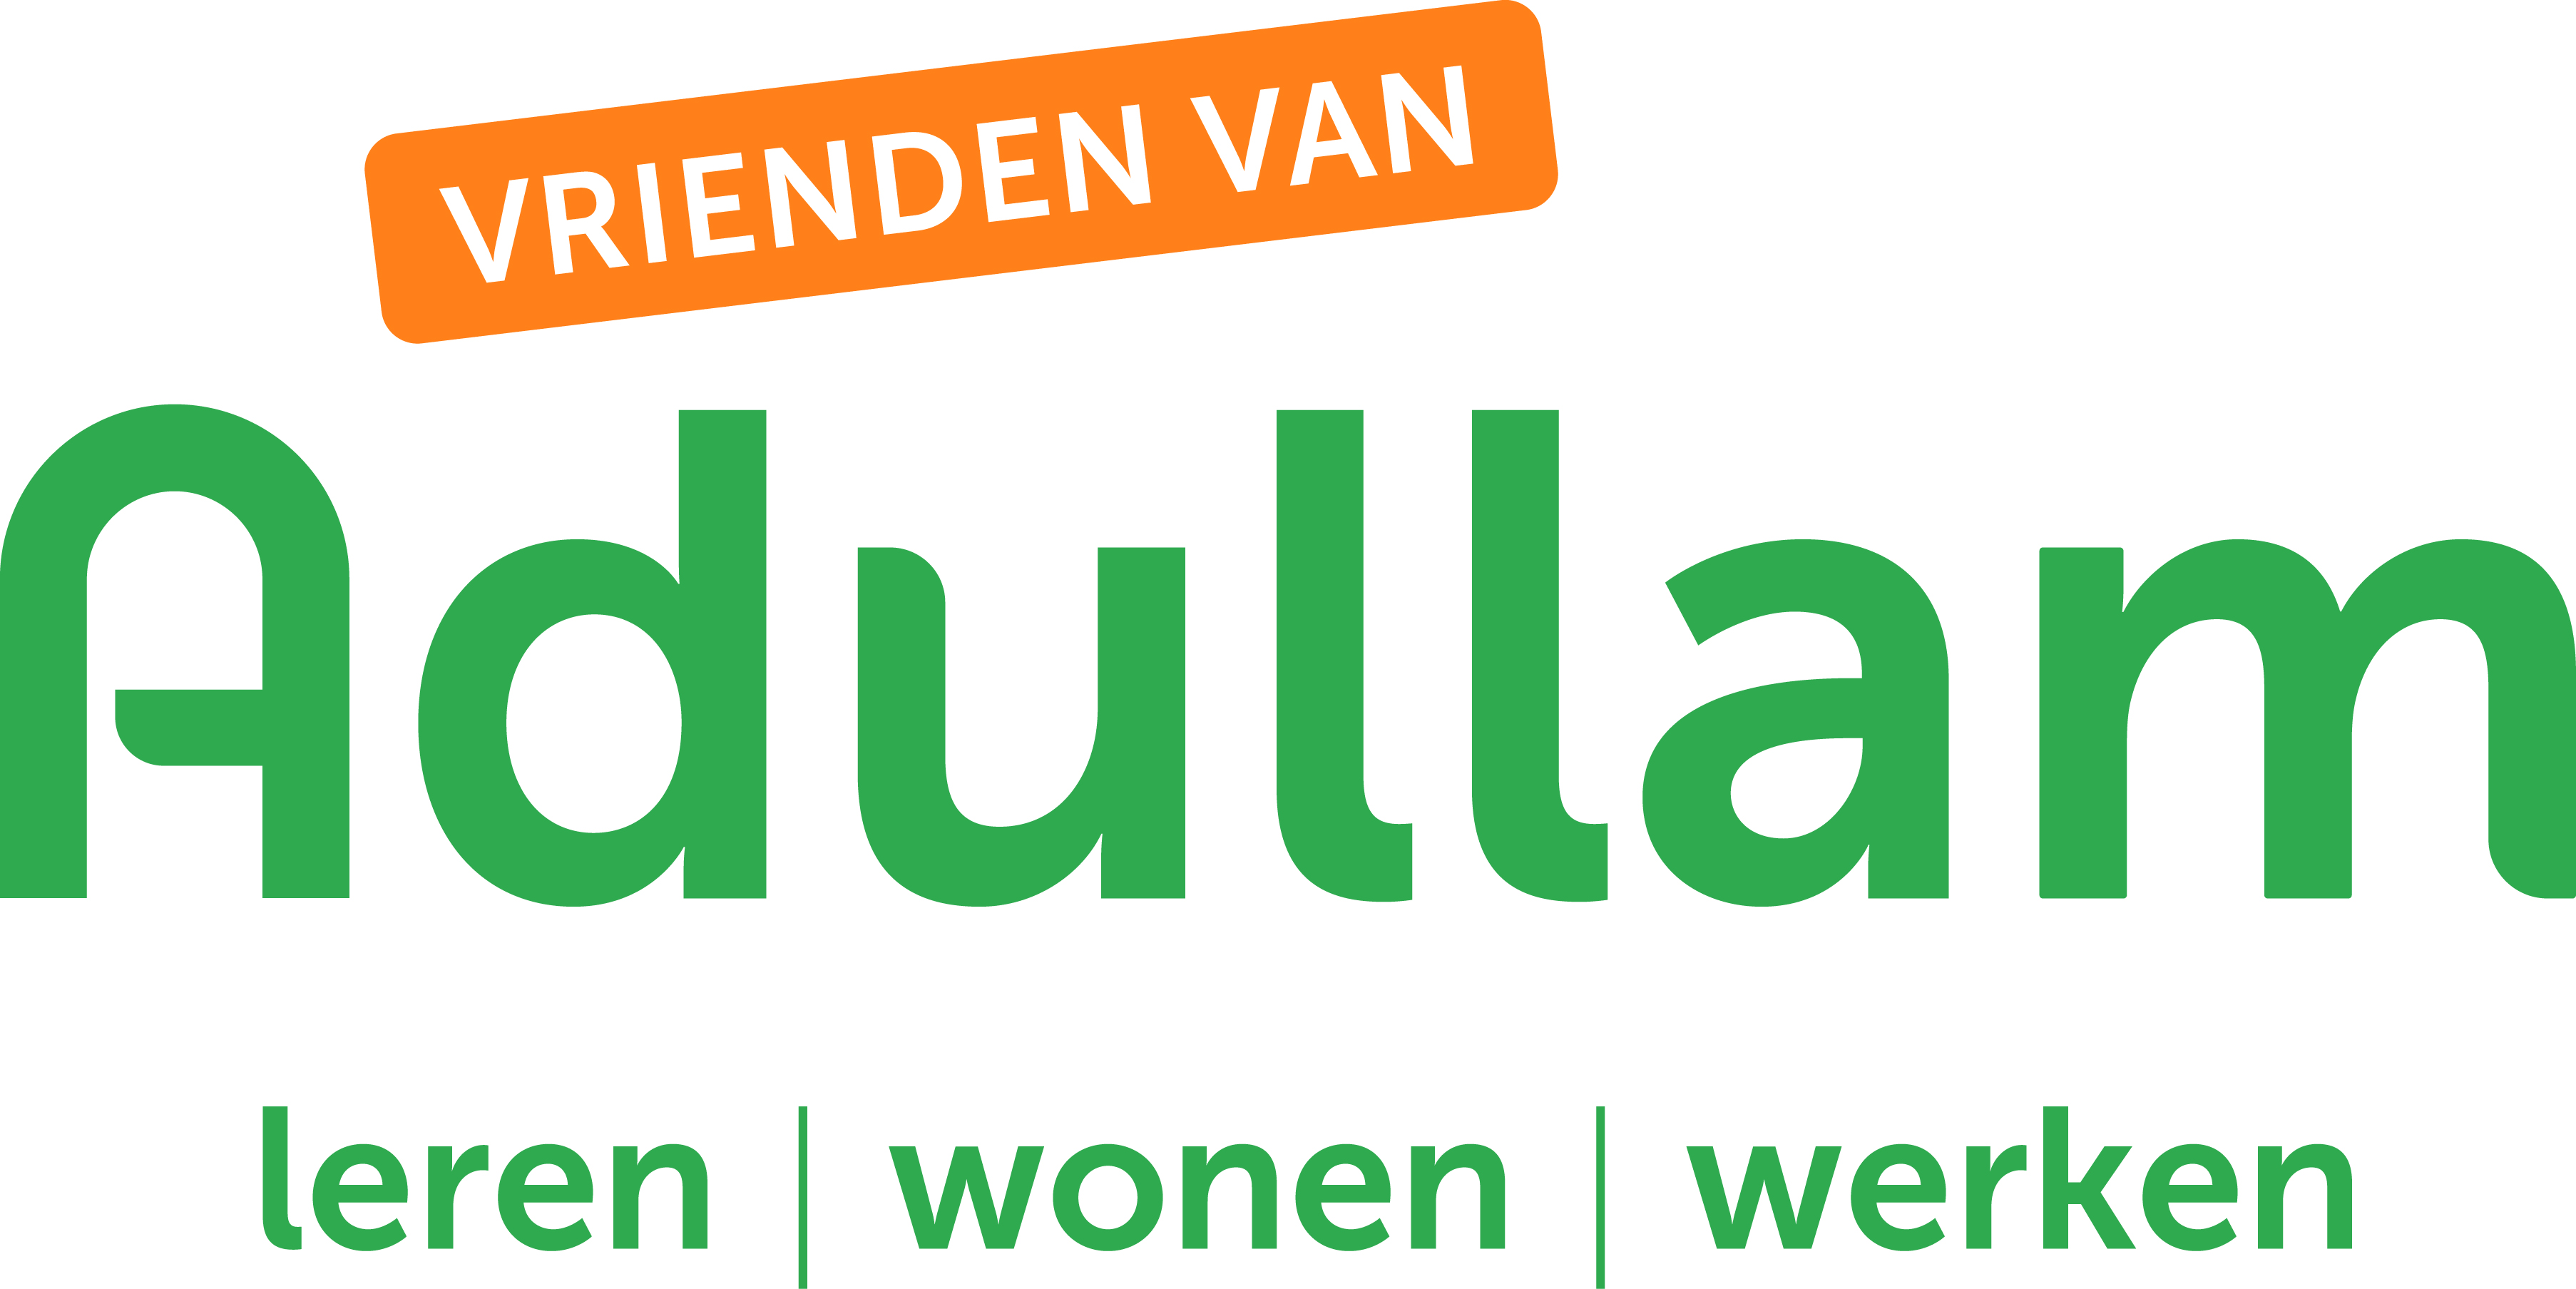 Vrienden van ADULLAM logo [RGB].jpg